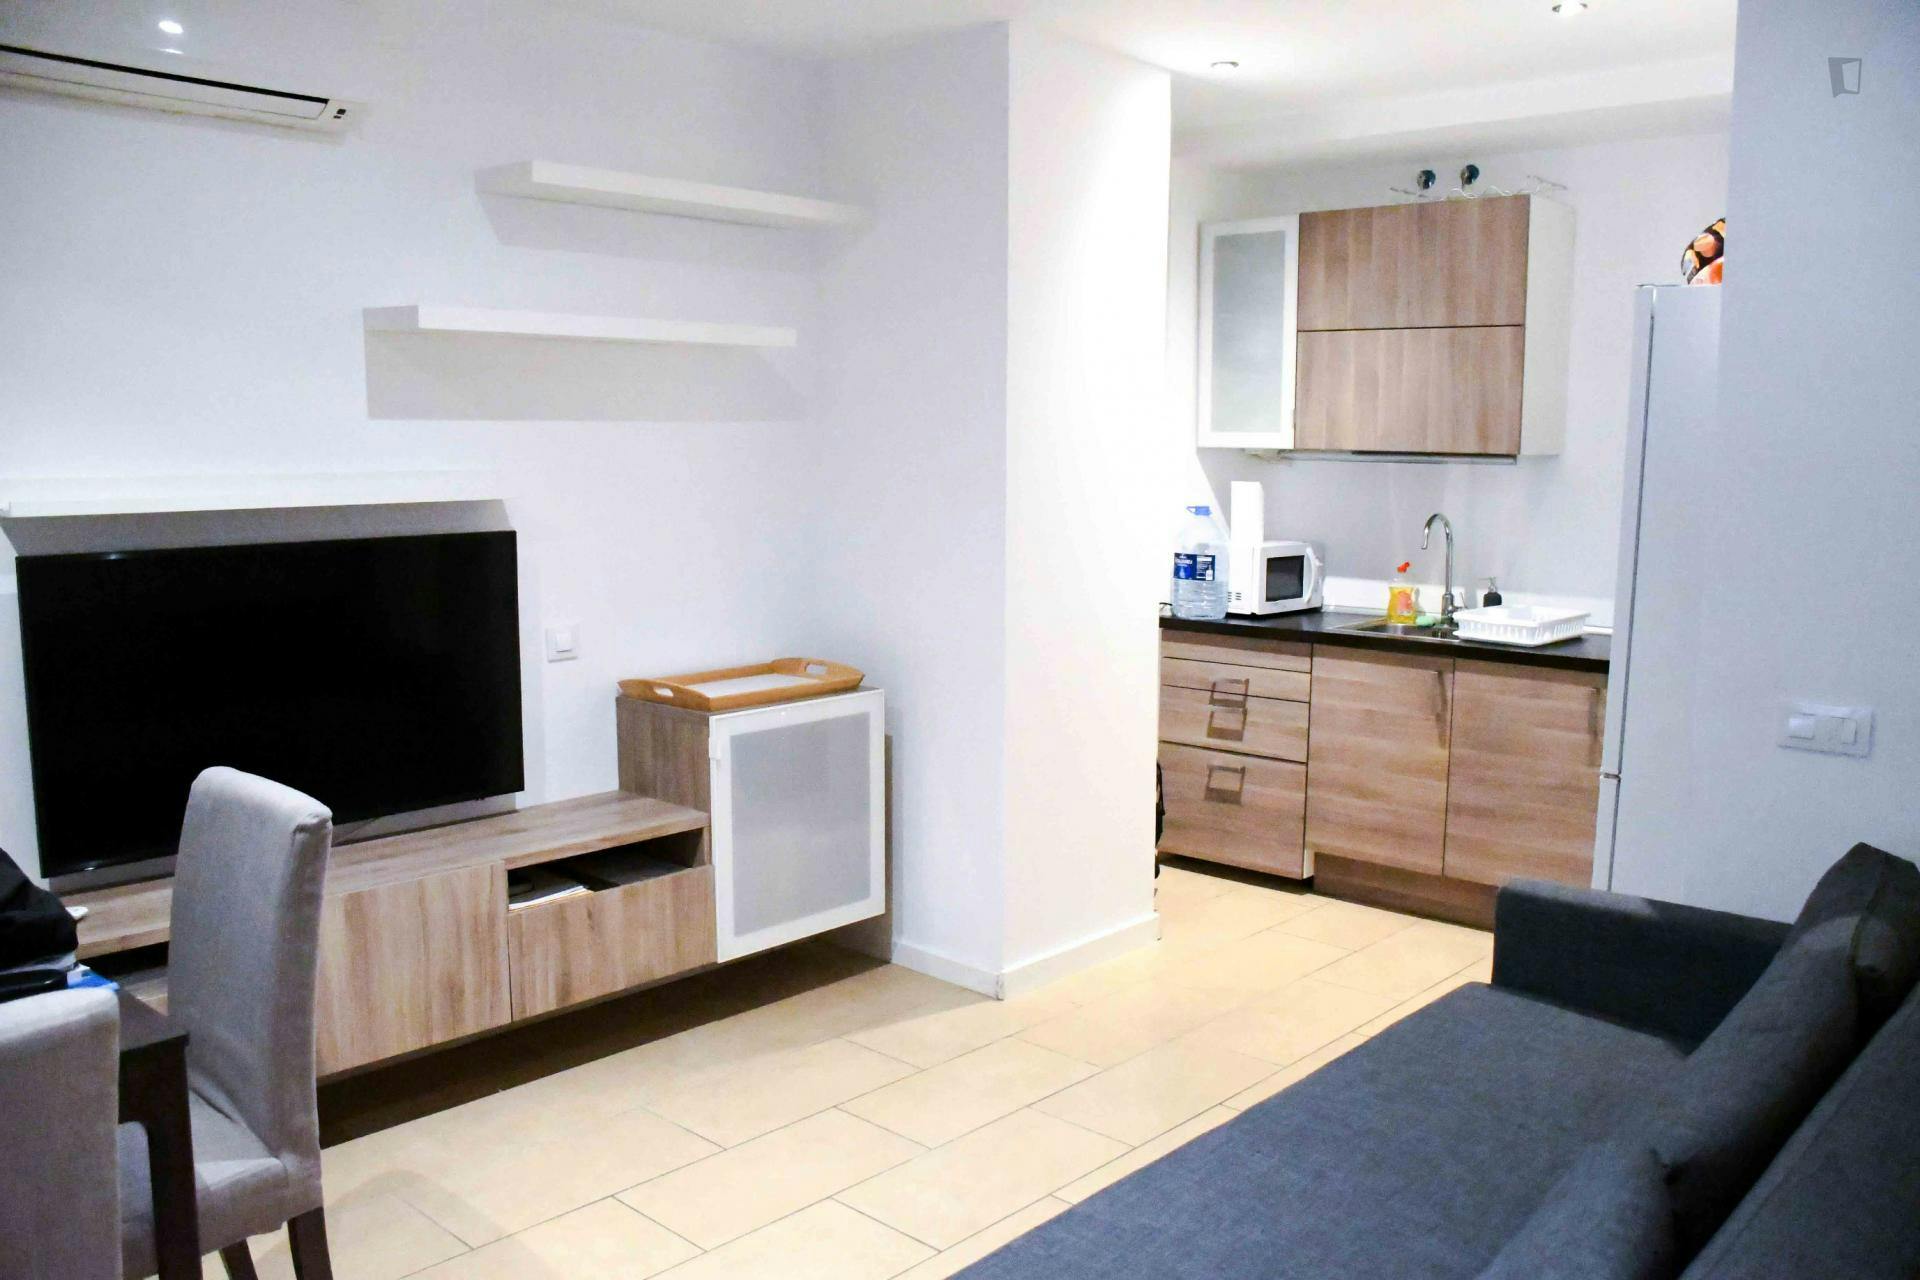 2-Bedroom apartment near Vallcarca metro station